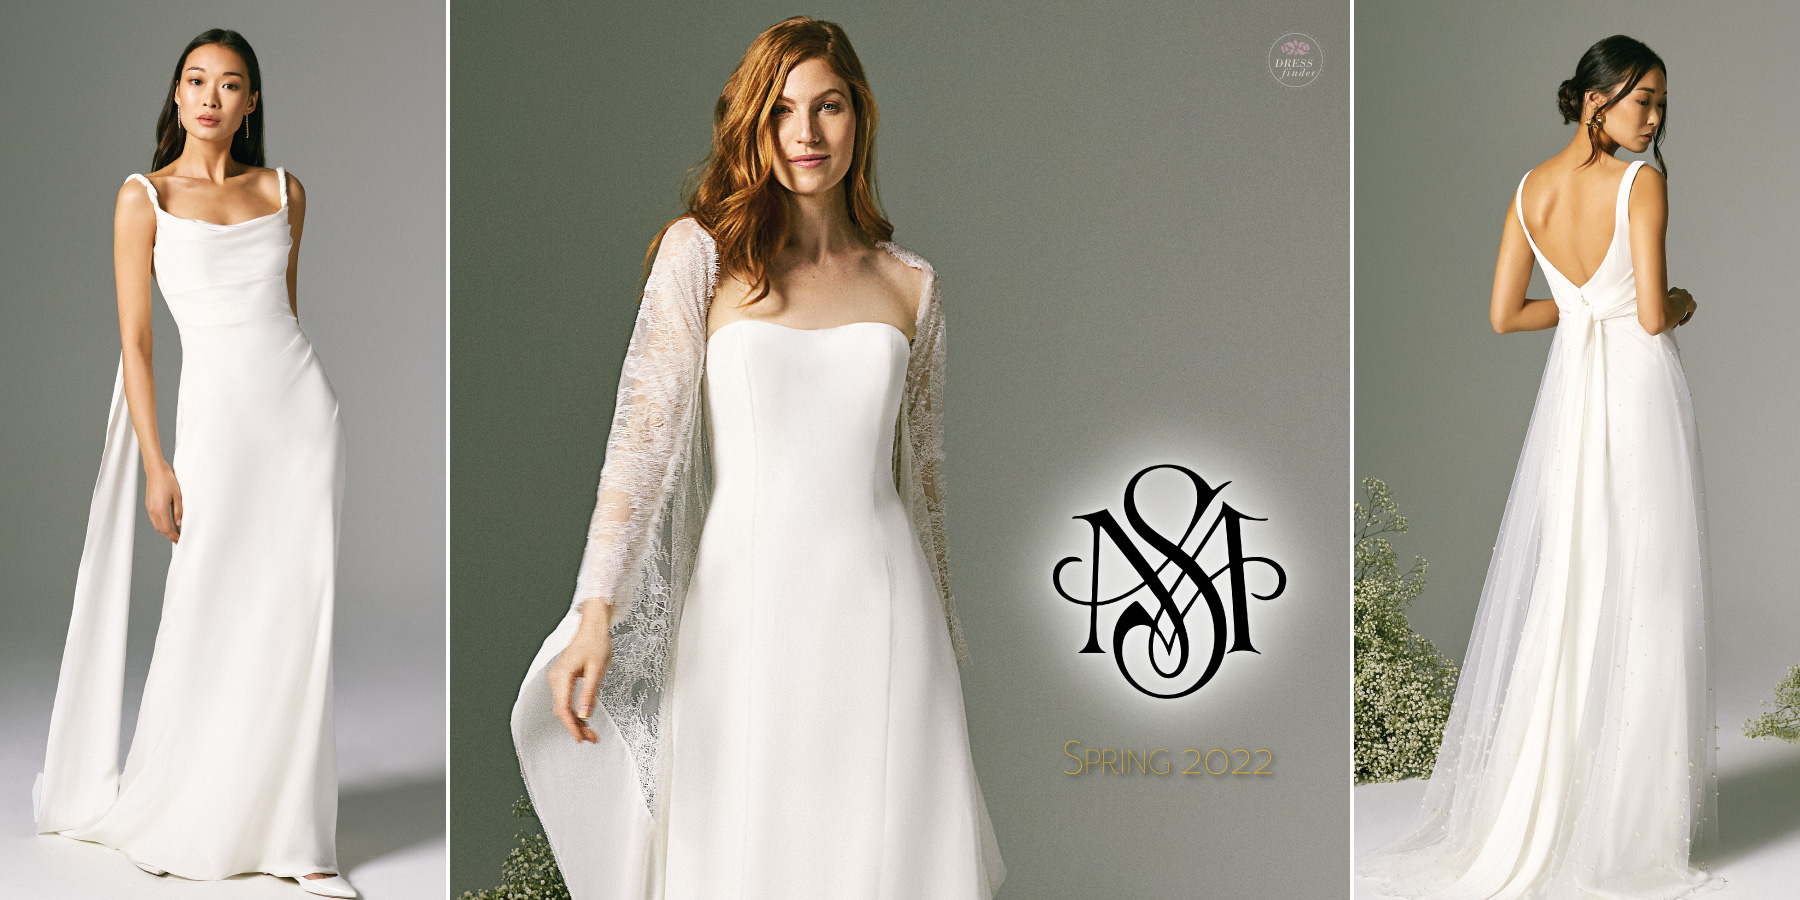 Style SM8115, Odette Wedding Dress by Savannah Miller Bridal